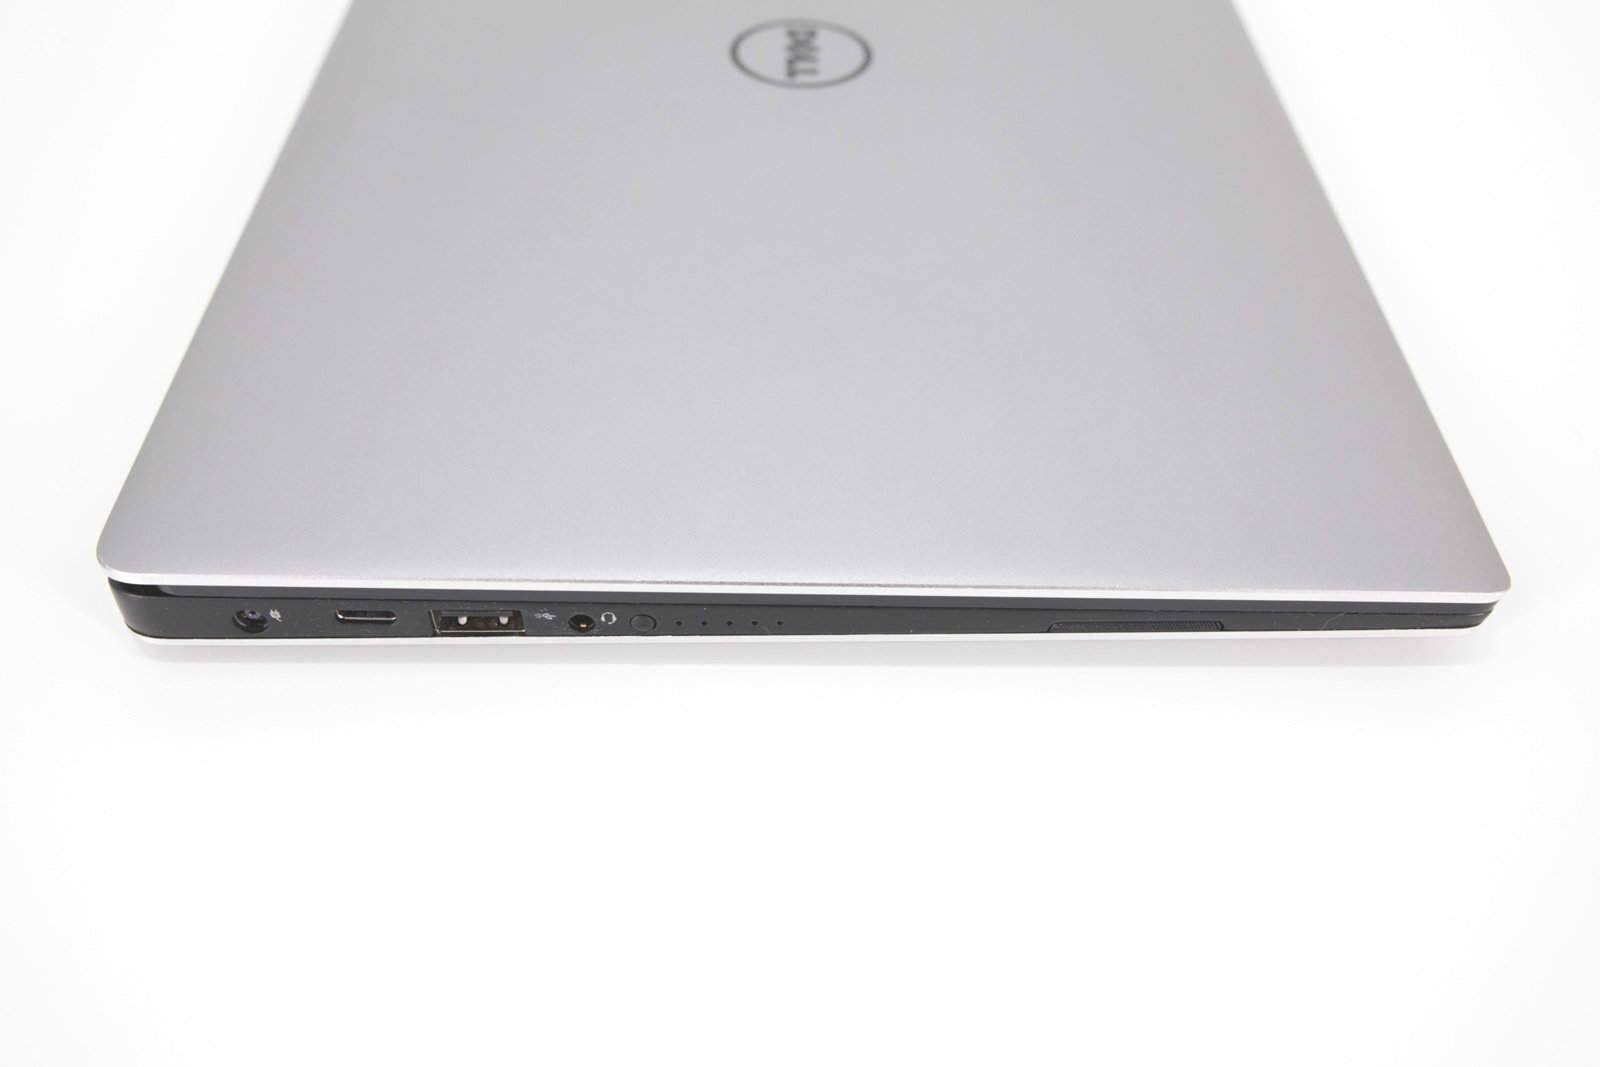 Dell XPS 13 9350 Laptop: 13.3" FHD Display, Core i7-6560U, 256GB, 8GB RAM - CruiseTech